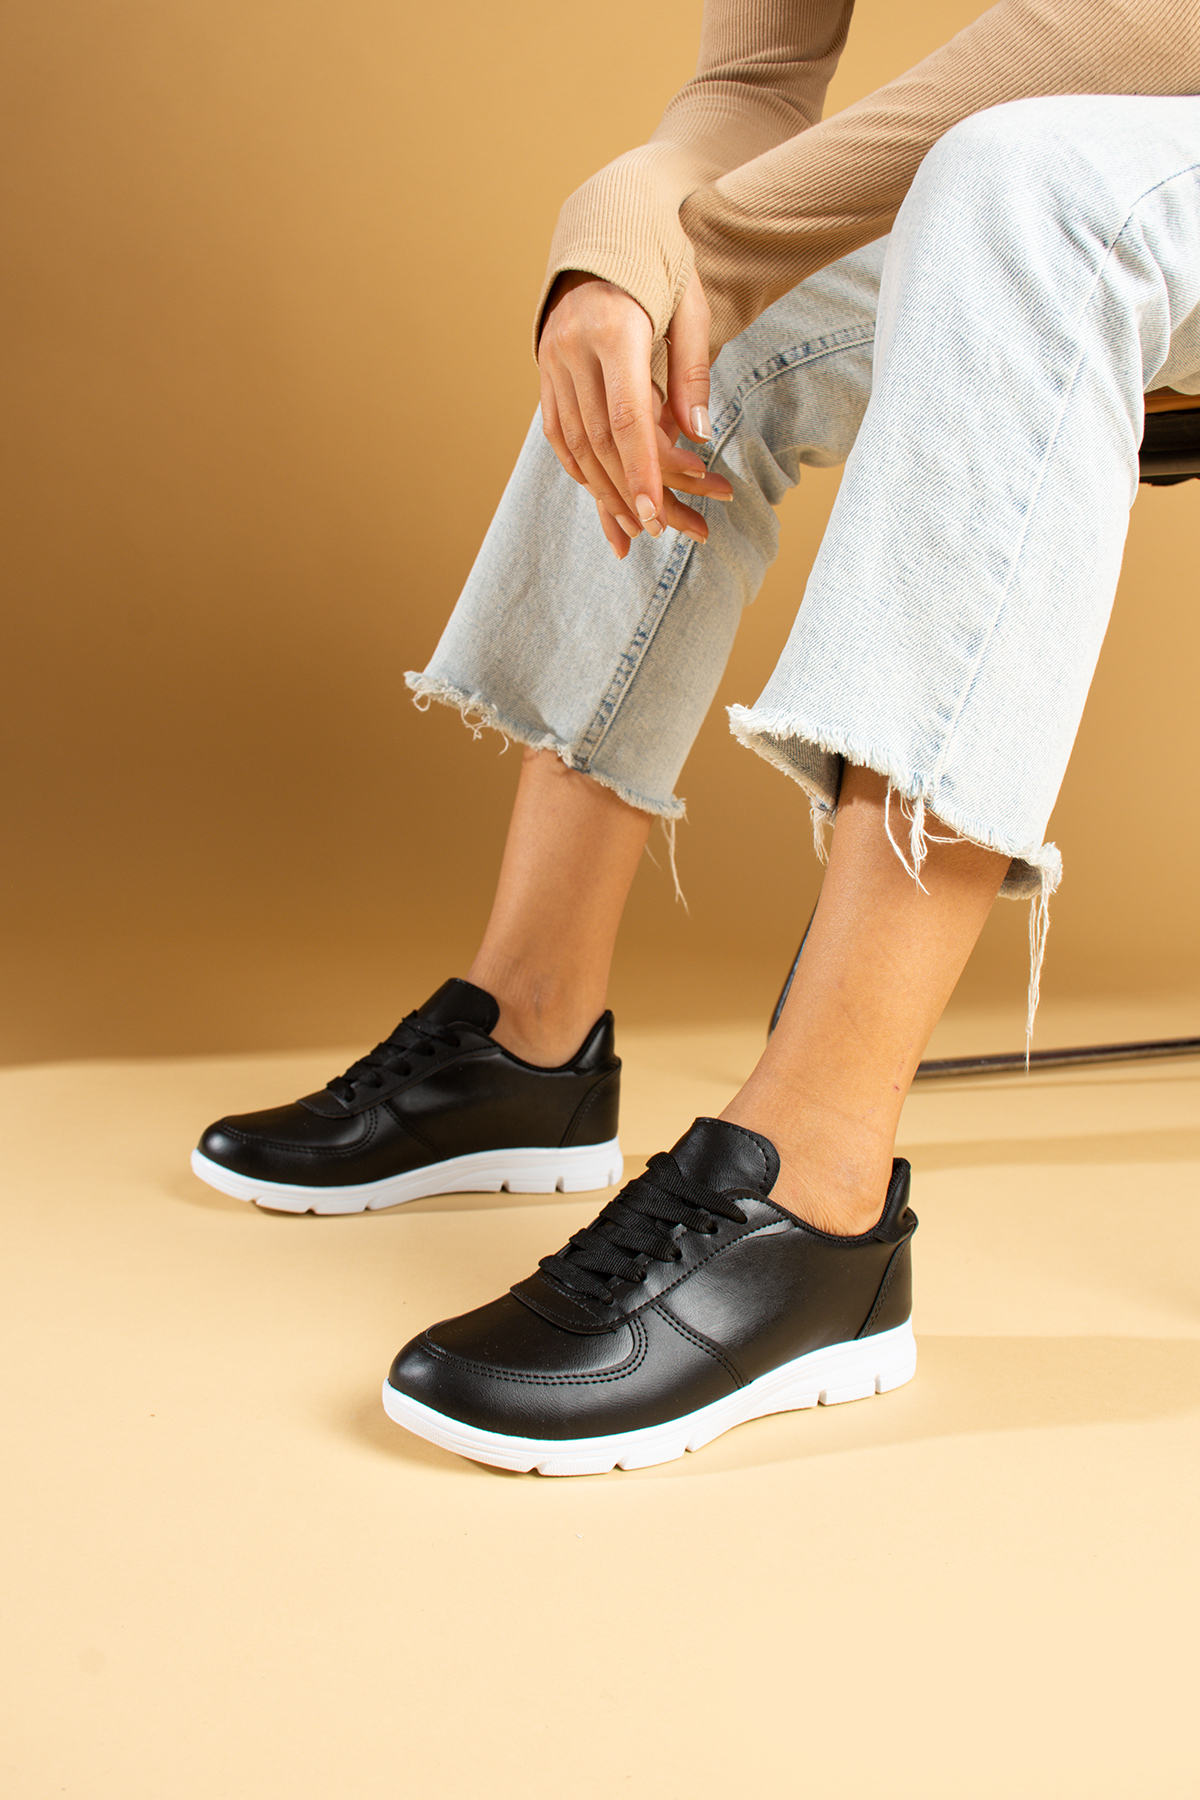 Pembe Potin Bağcıklı Comfort Taban Kadın Sneaker A1971-23Cilt - Siyah